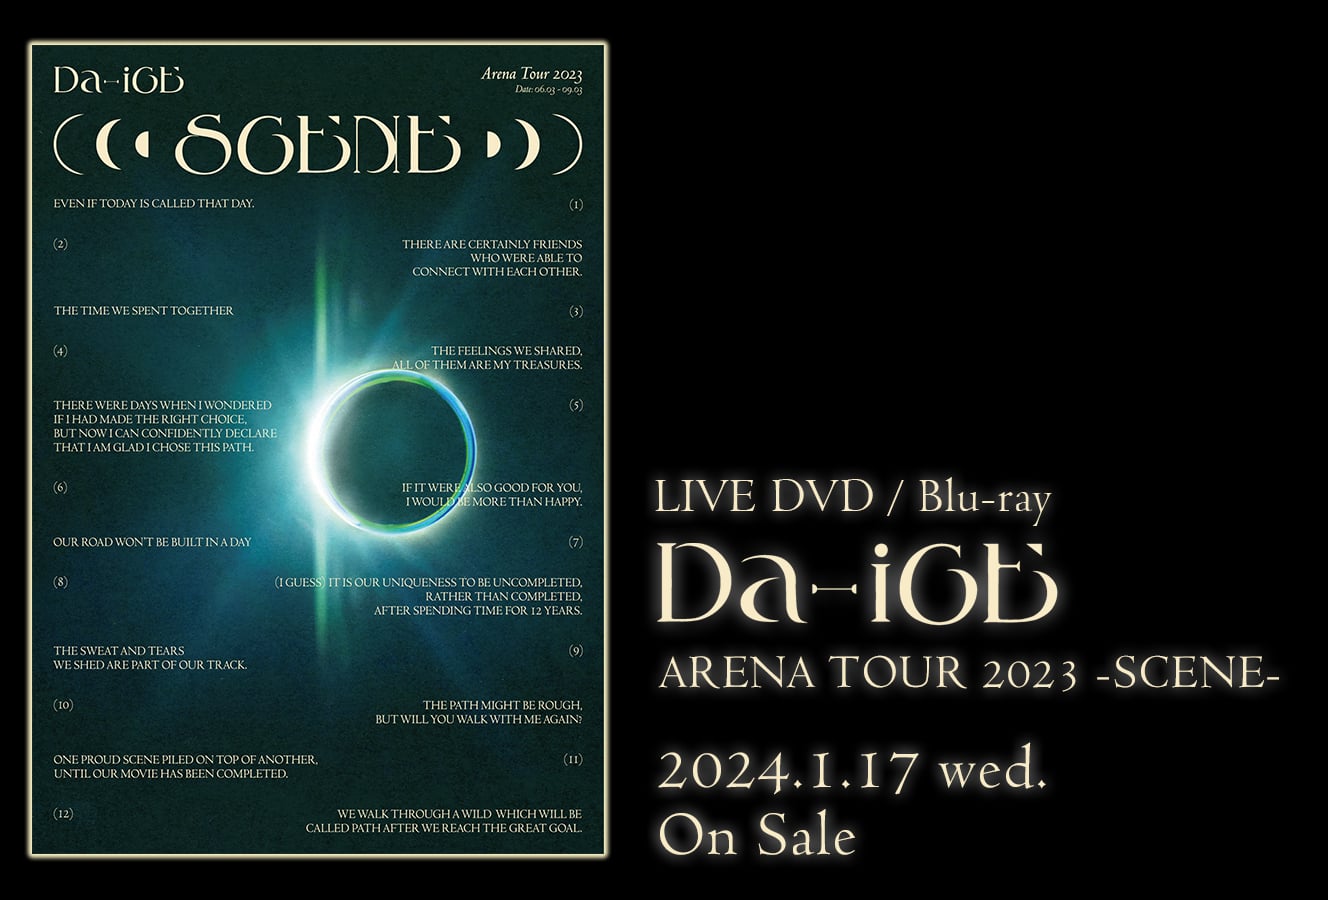 初回限定Da-iCE/ARENA TOUR 2023-SCENE- DVDCDDVD